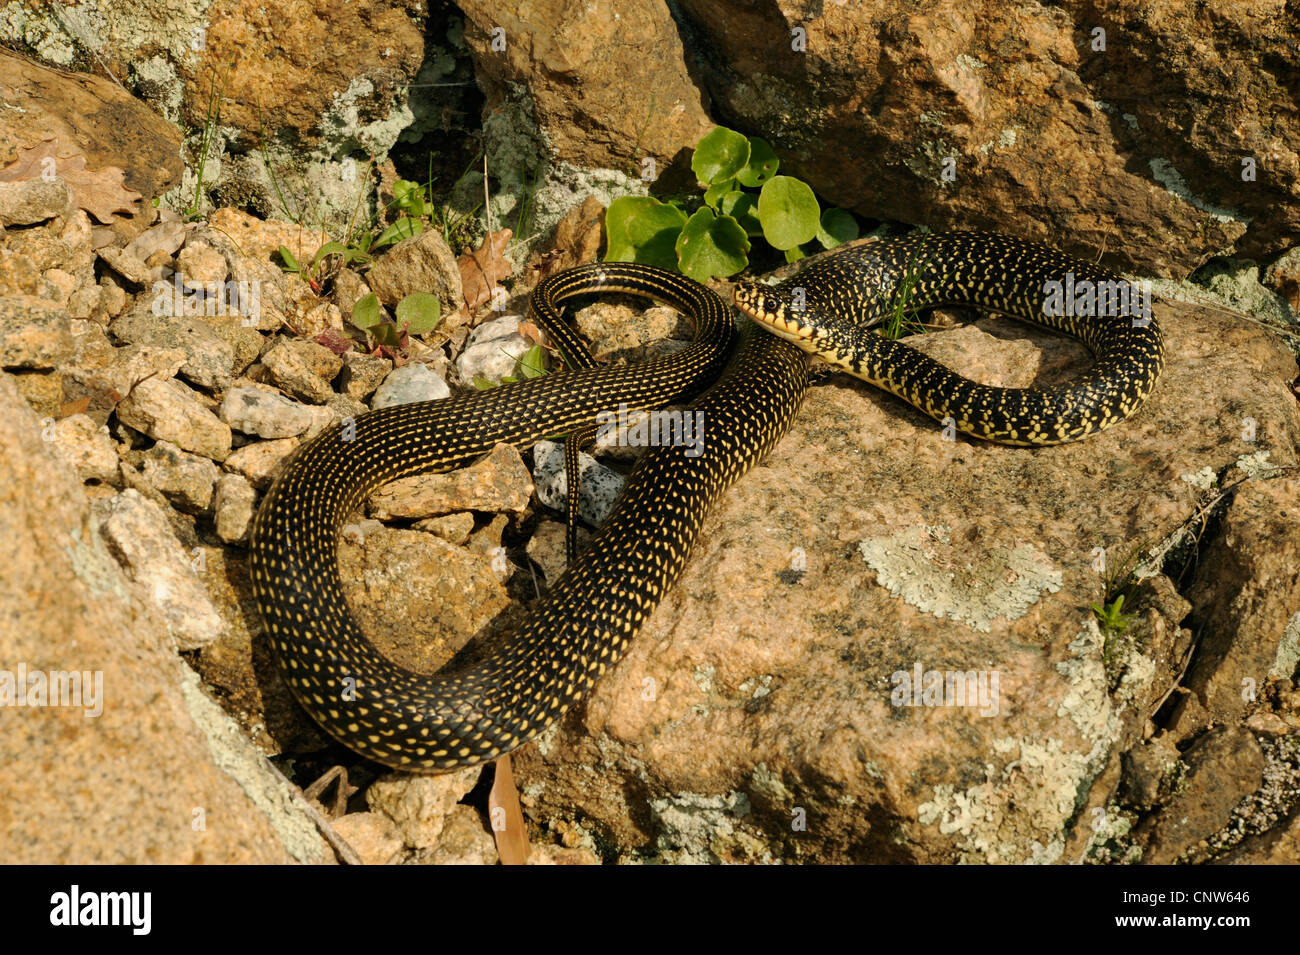 Unione frusta snake, dell'Europa occidentale frusta snake, verde scuro e  whipsnake (Coluber viridiflavus, Hierophis viridiflavus ), su roccia,  Italia Sardegna Foto stock - Alamy